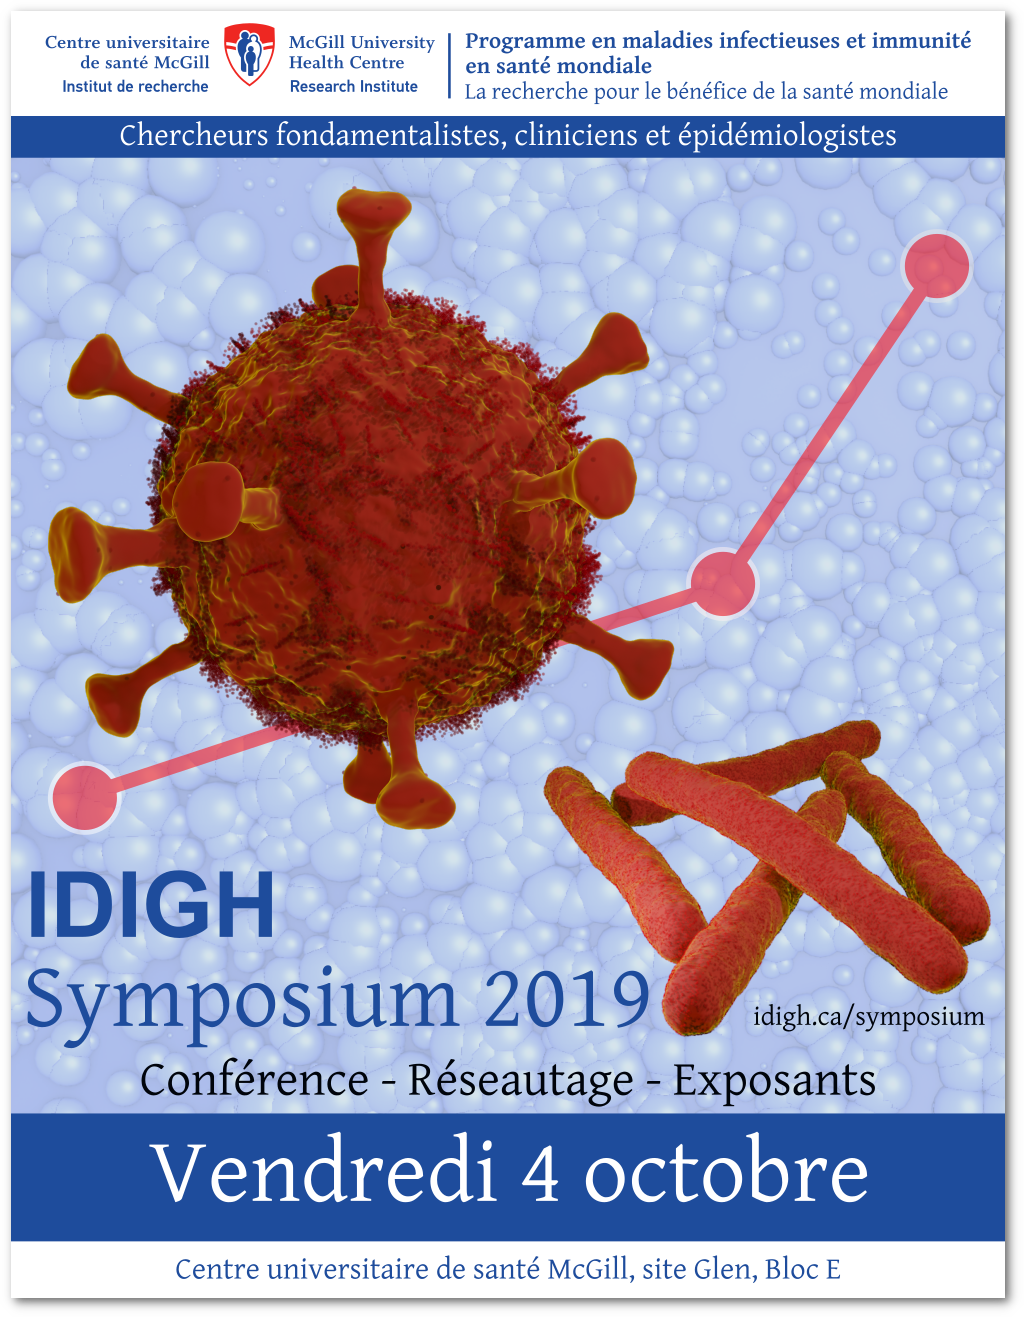 IDIGH Symposium Program